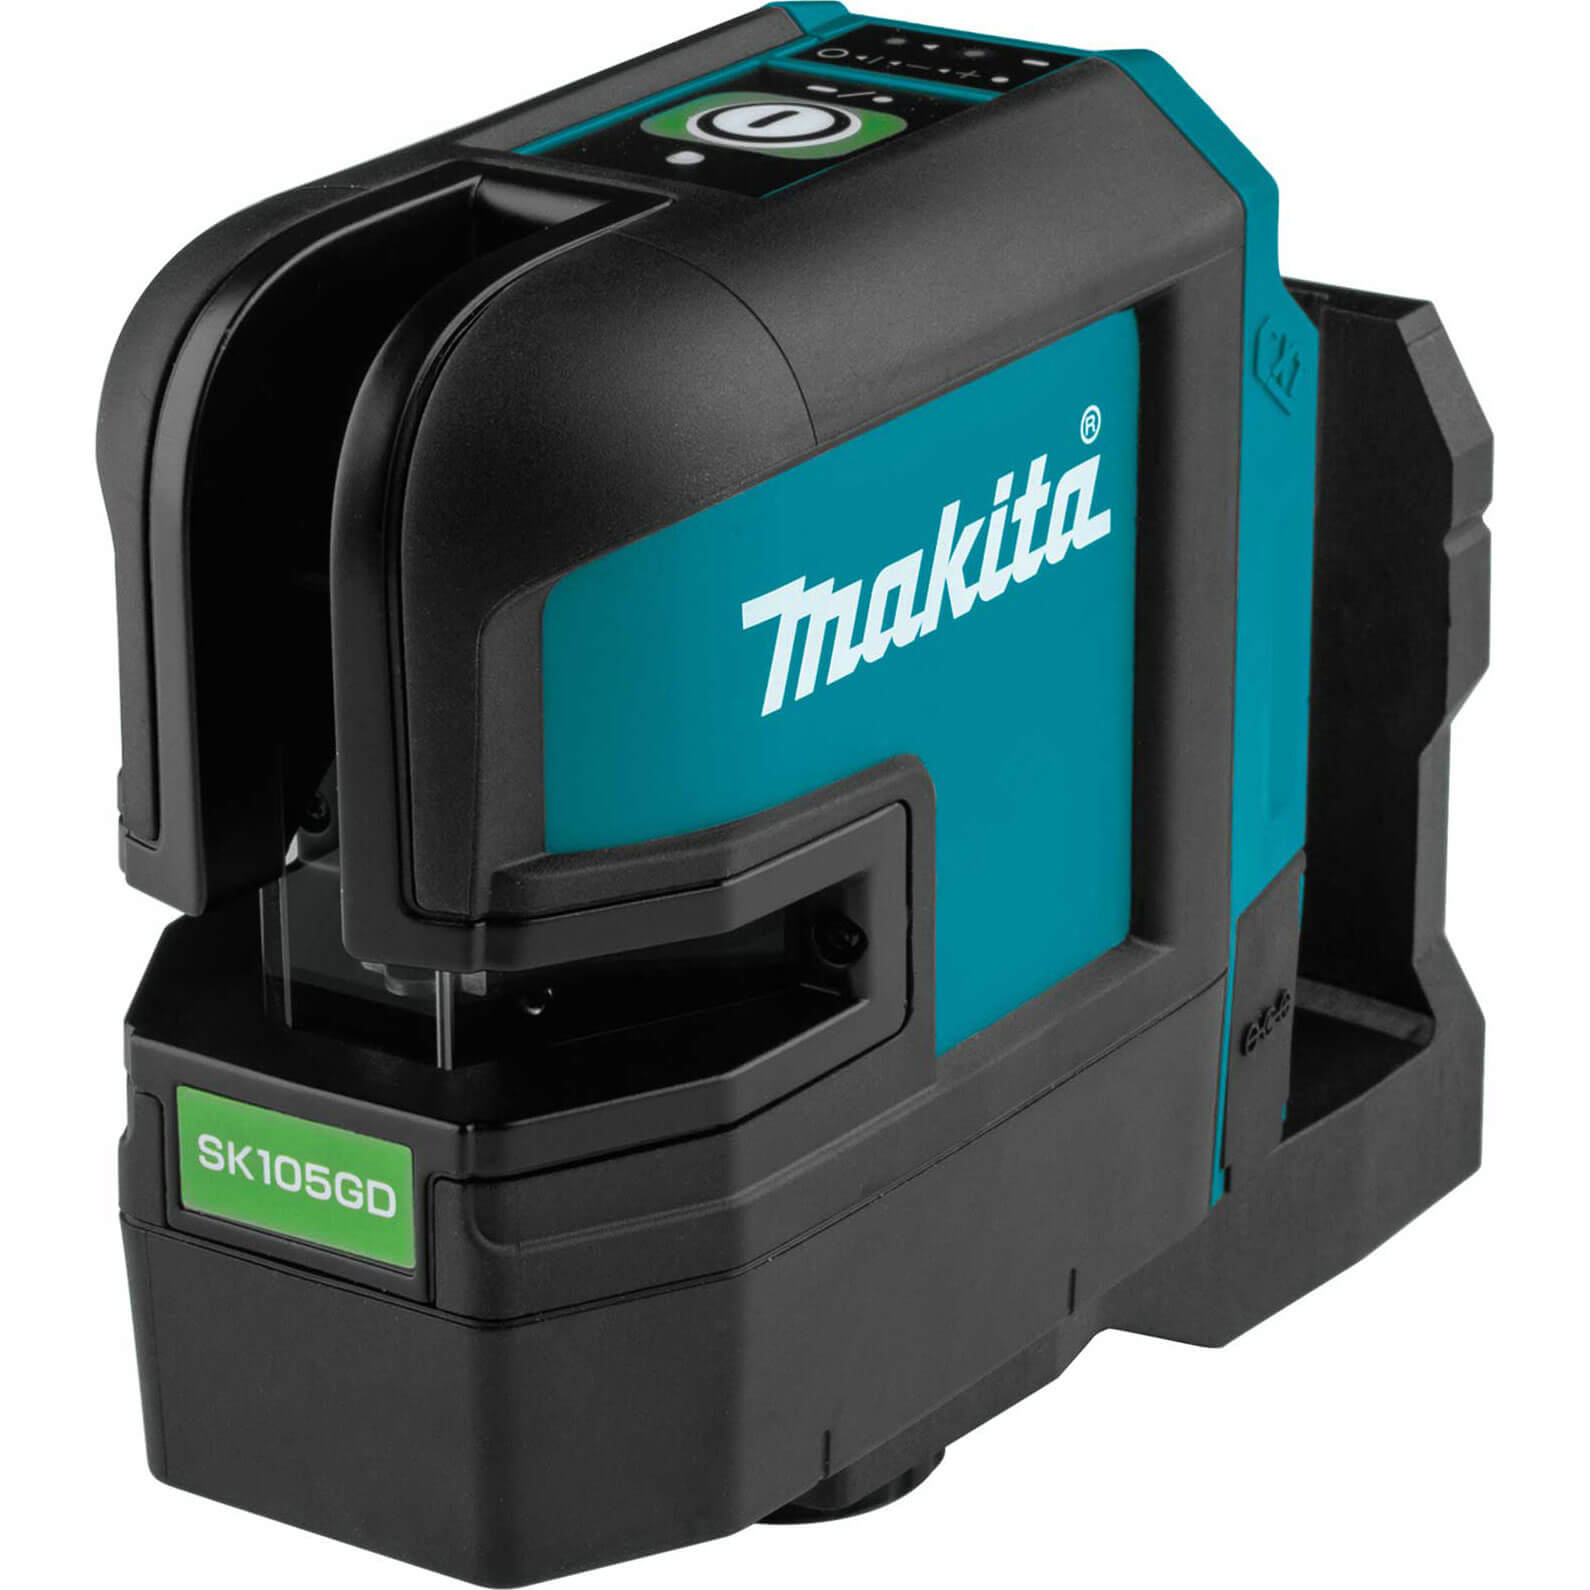 Makita SK105GD 12v Max CXT Cordless Green Cross Line Laser Level No Batteries No Charger Bag